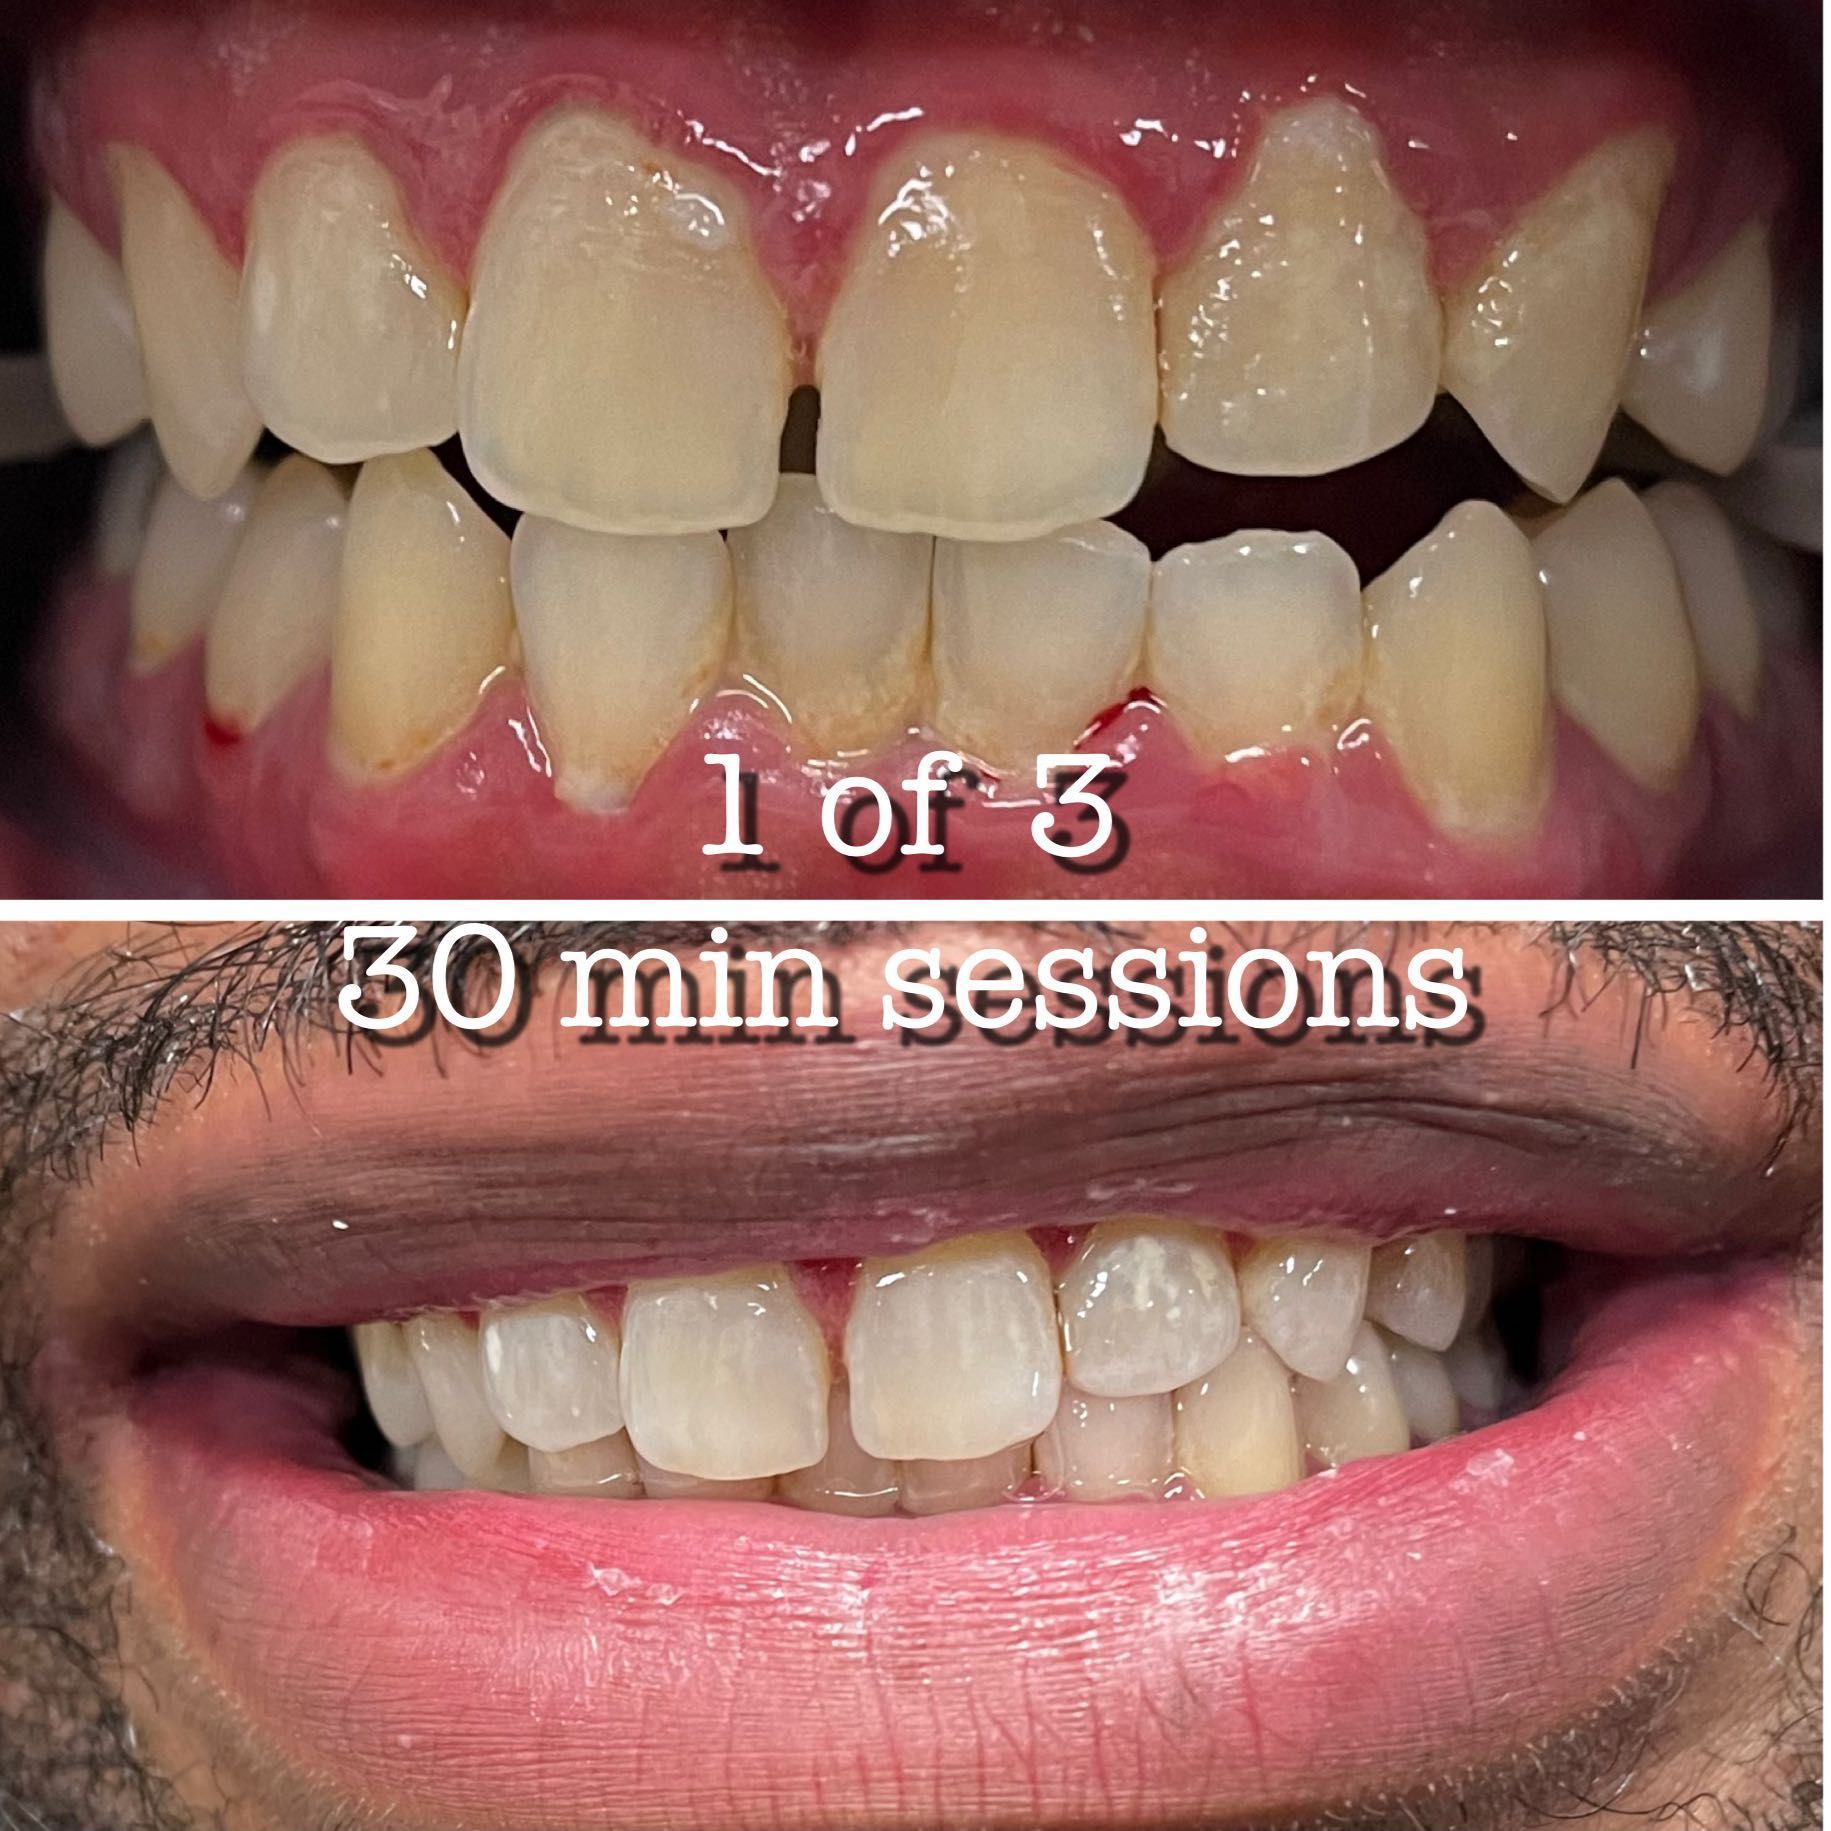 Ultra sonic teeth whitening portfolio